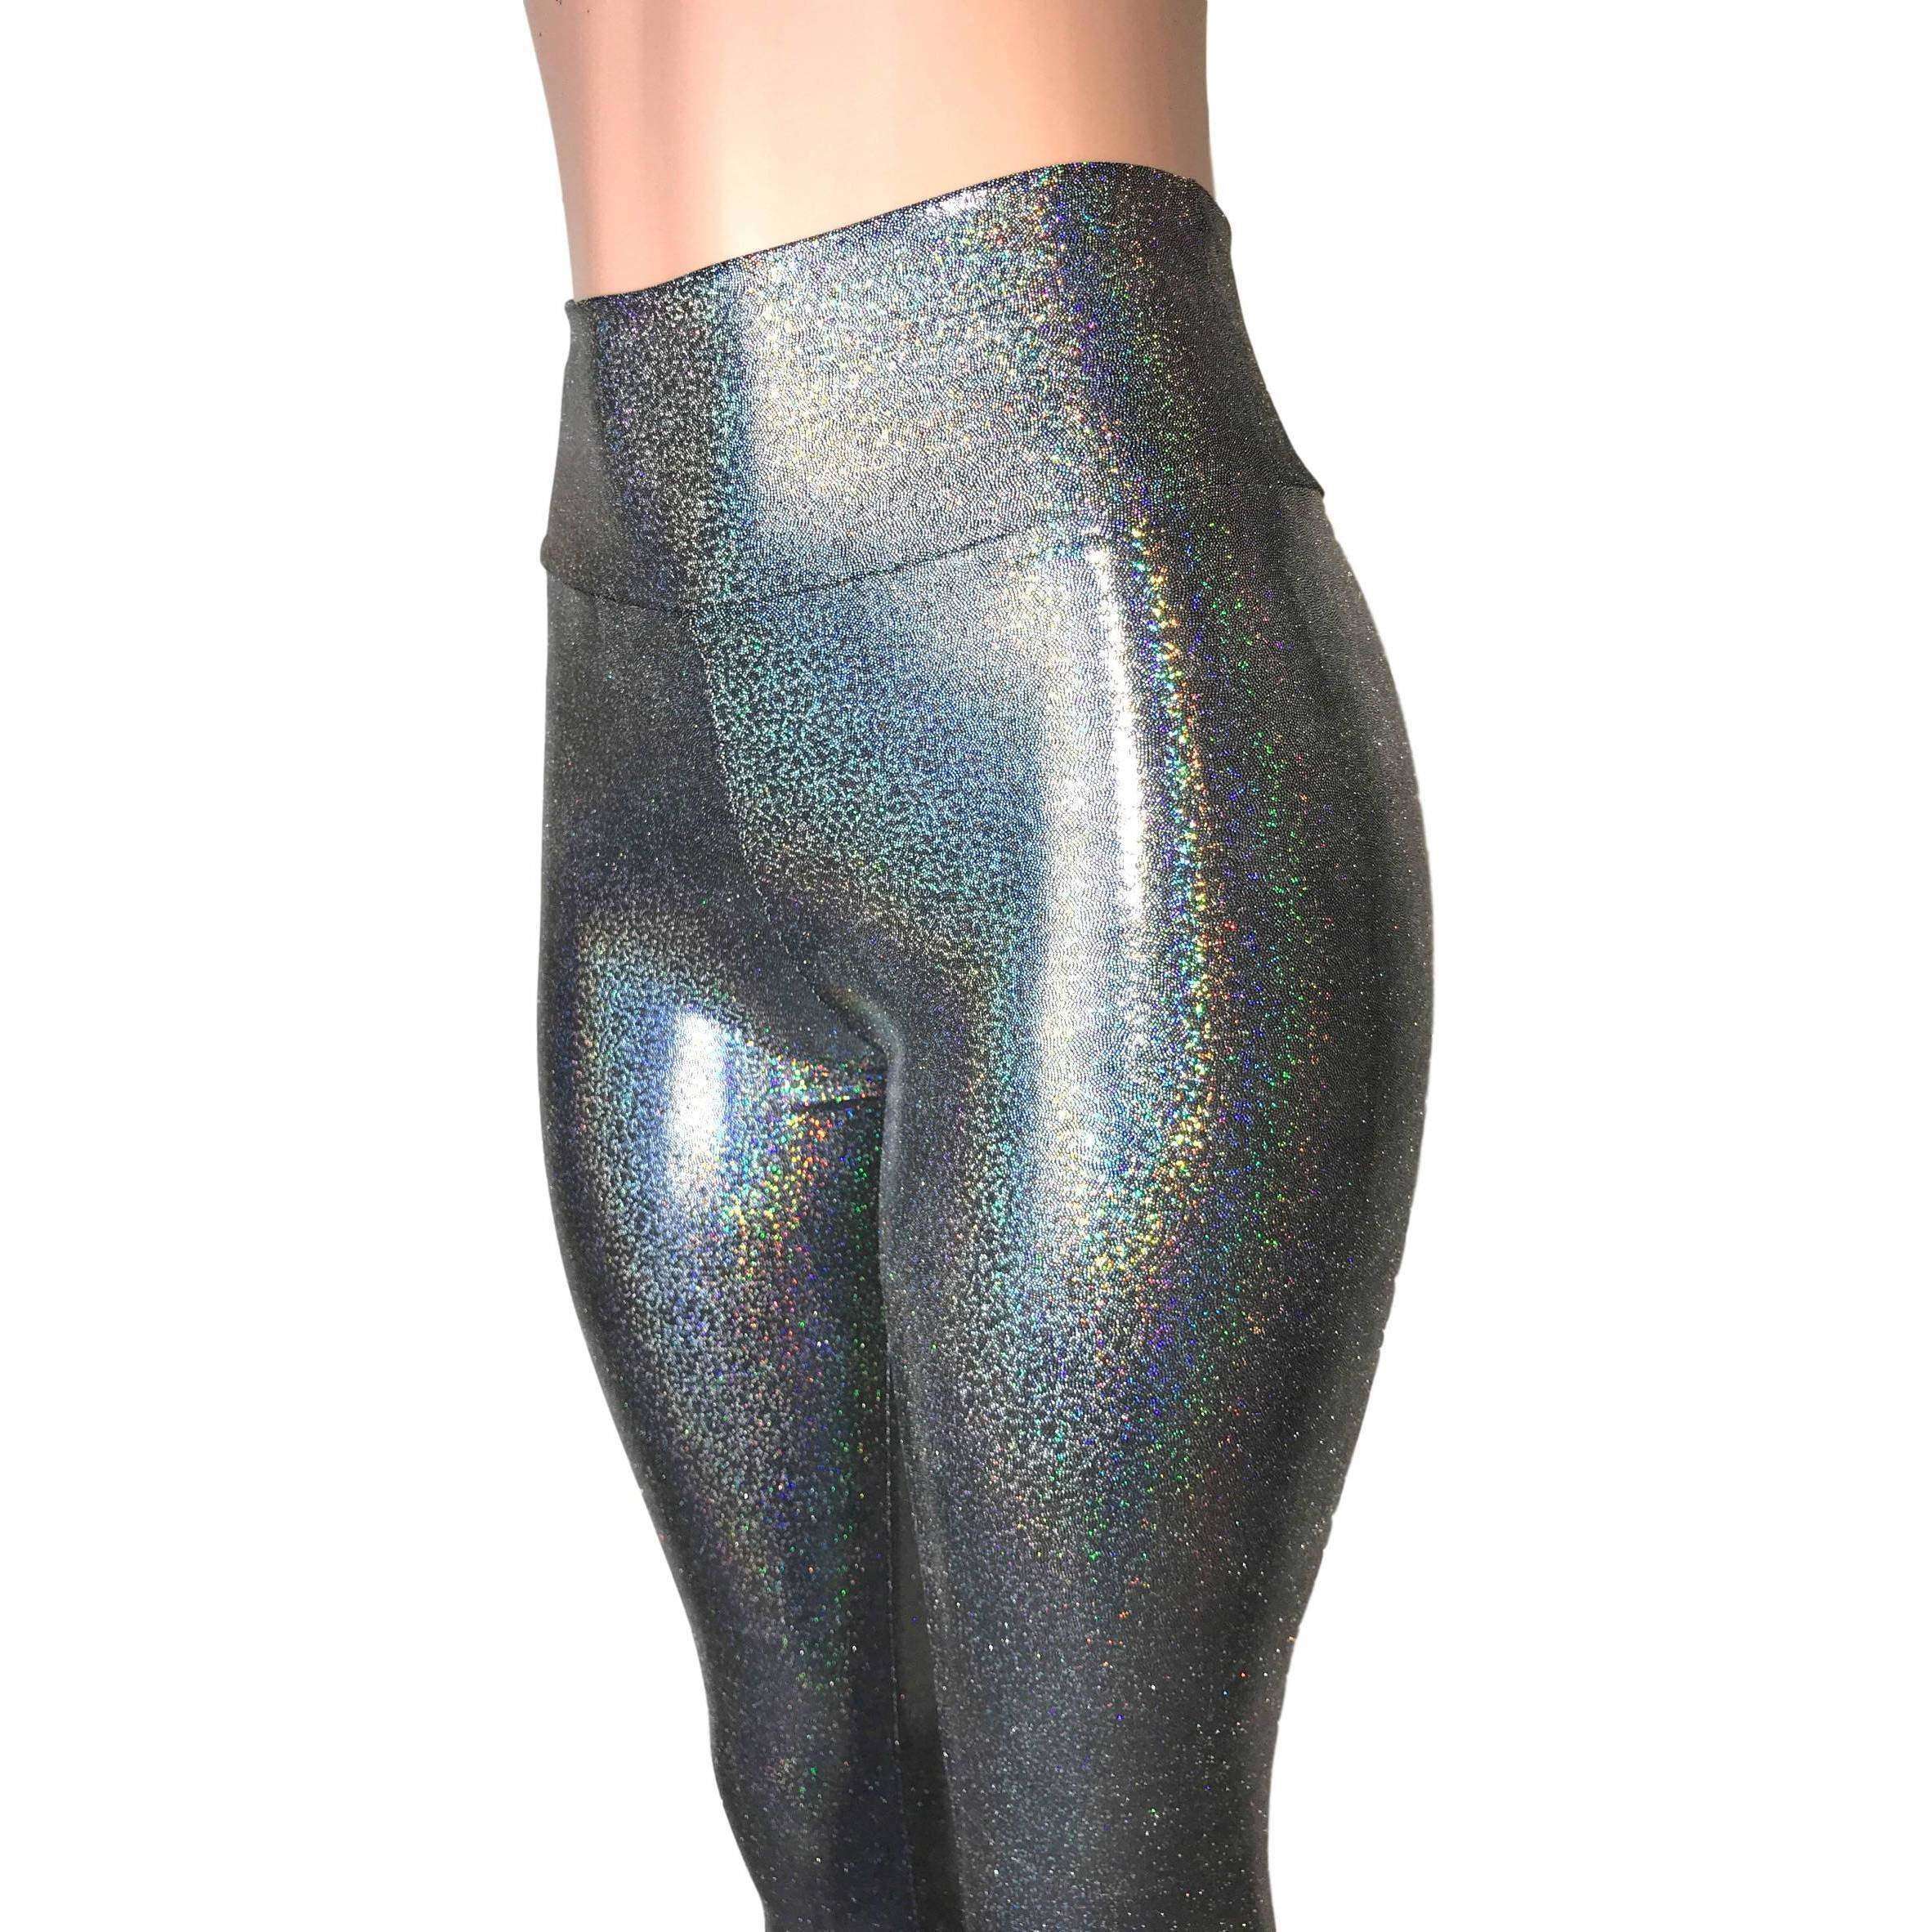 Silver Leggings Metallic Sparkling Legging Women's High Waist